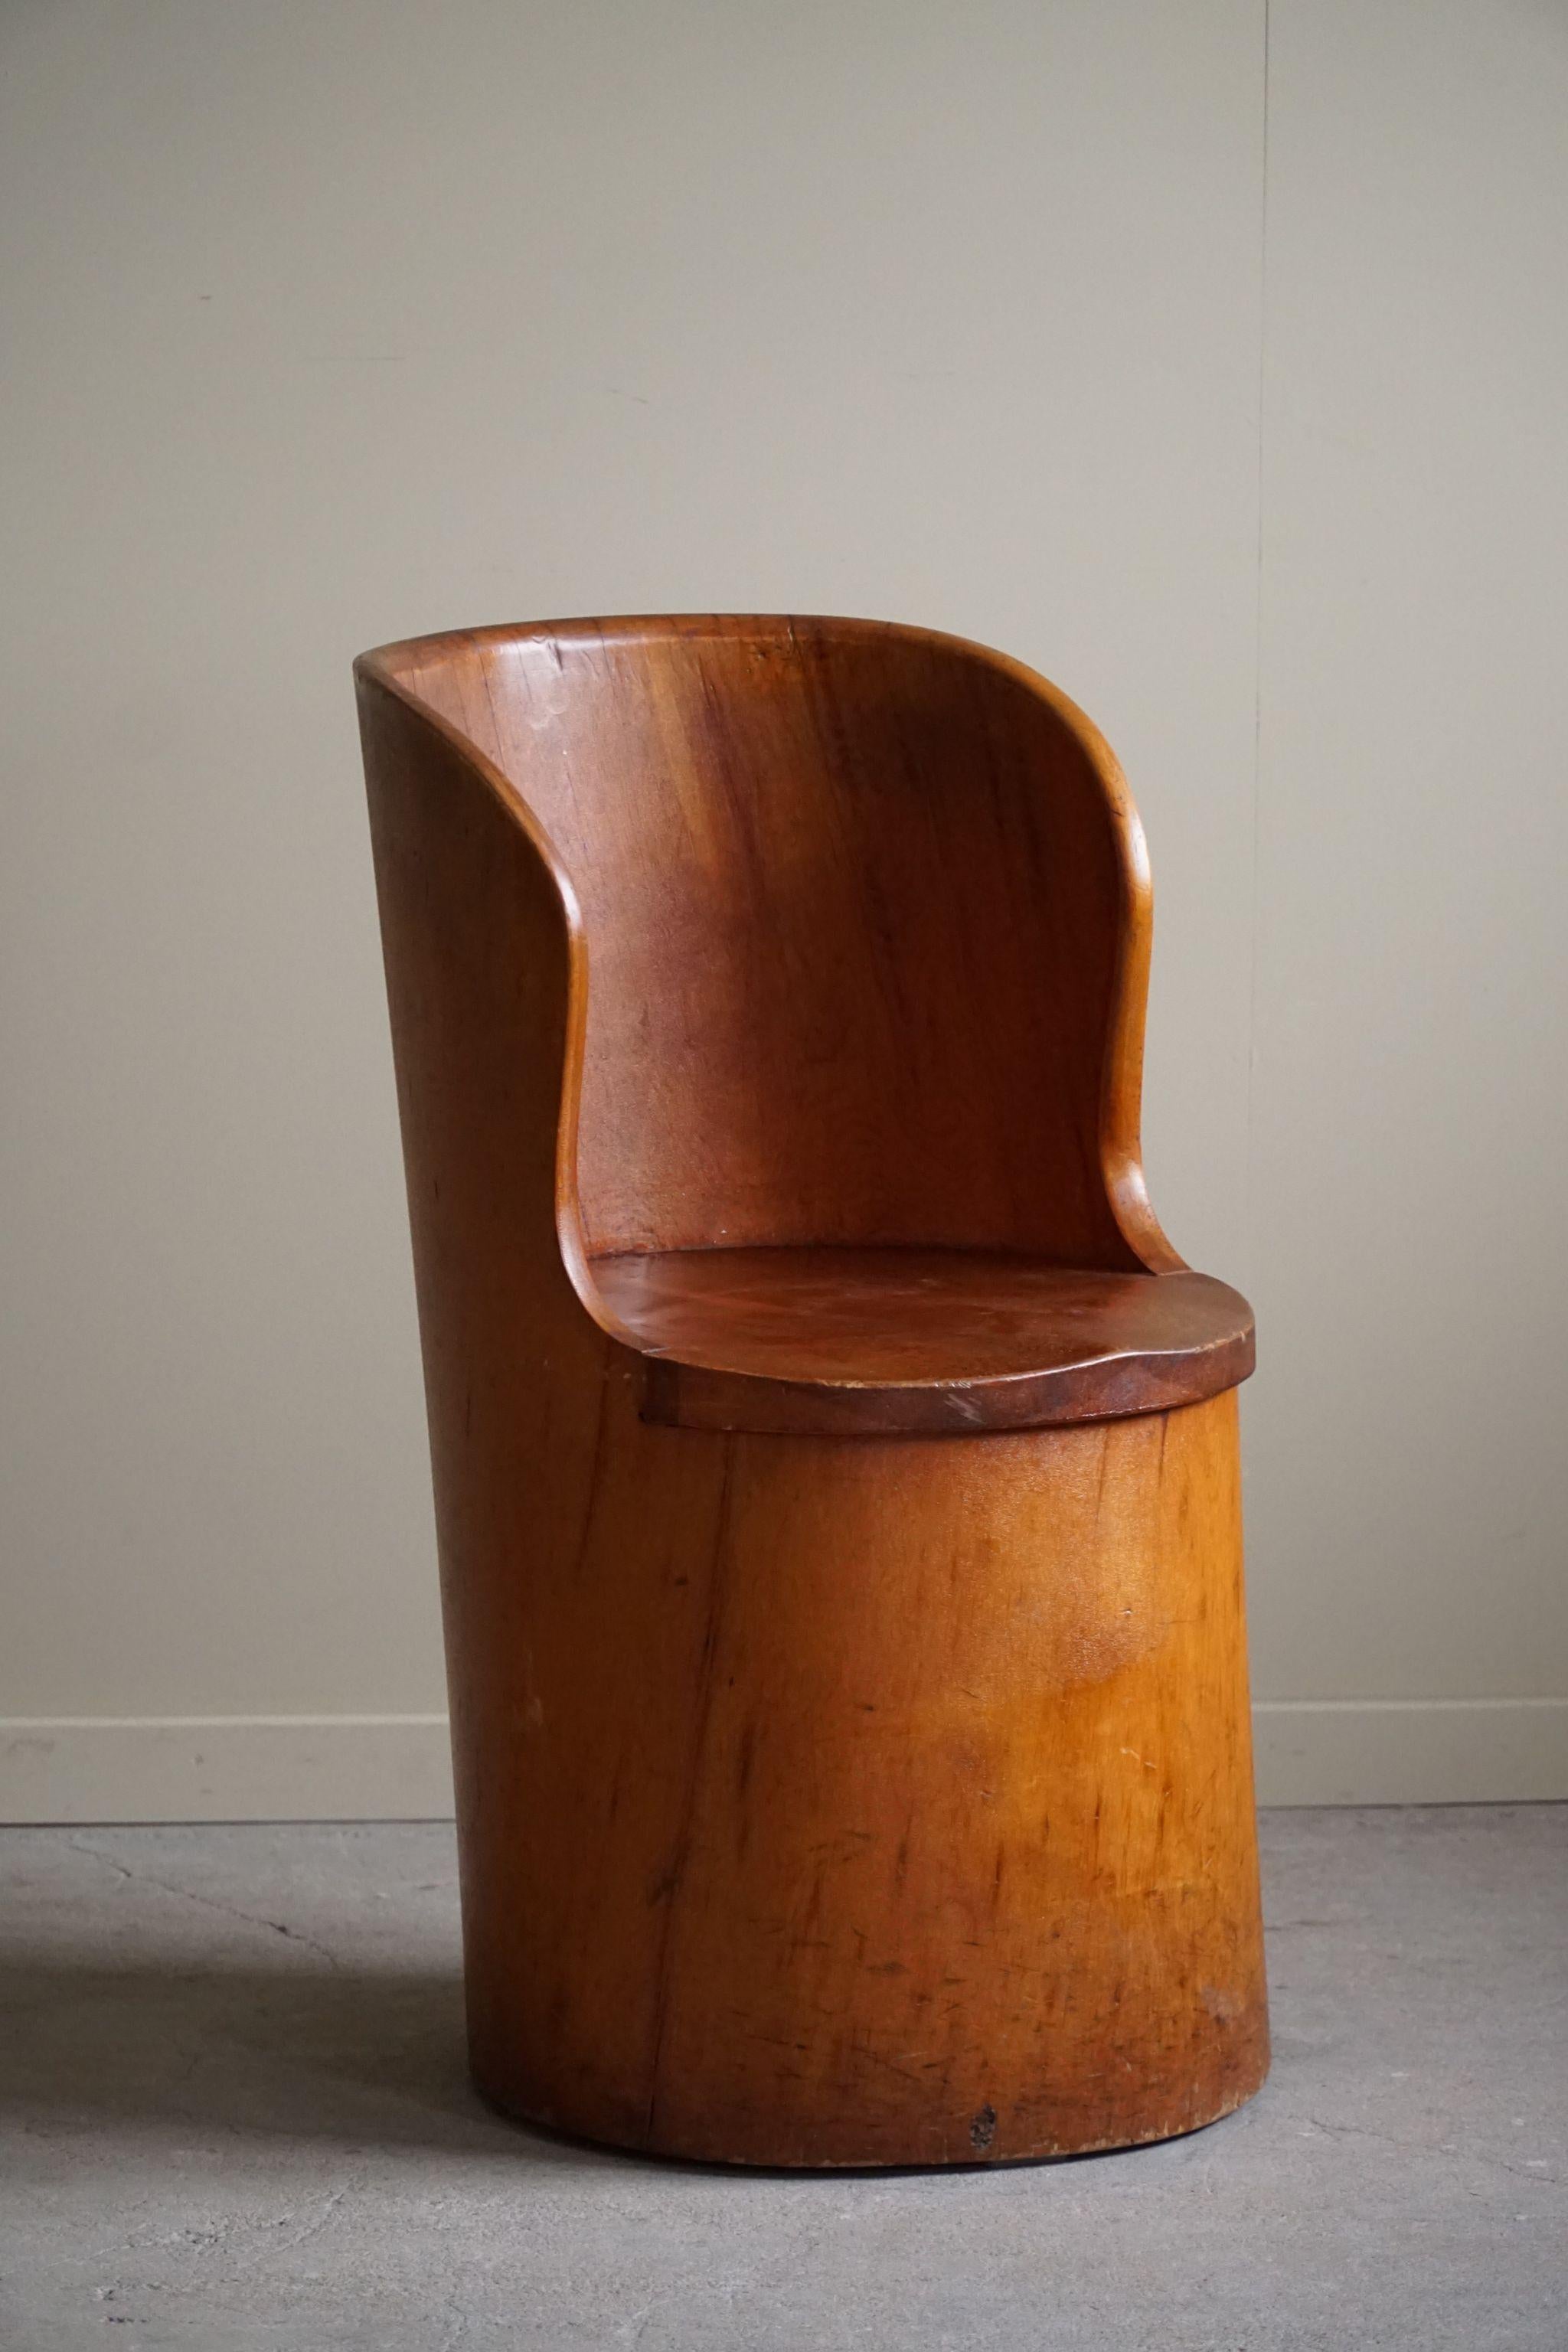  Hand Carved Primitive Stump Chair in Pine, Swedish Modern, Wabi Sabi, 1960s For Sale 2